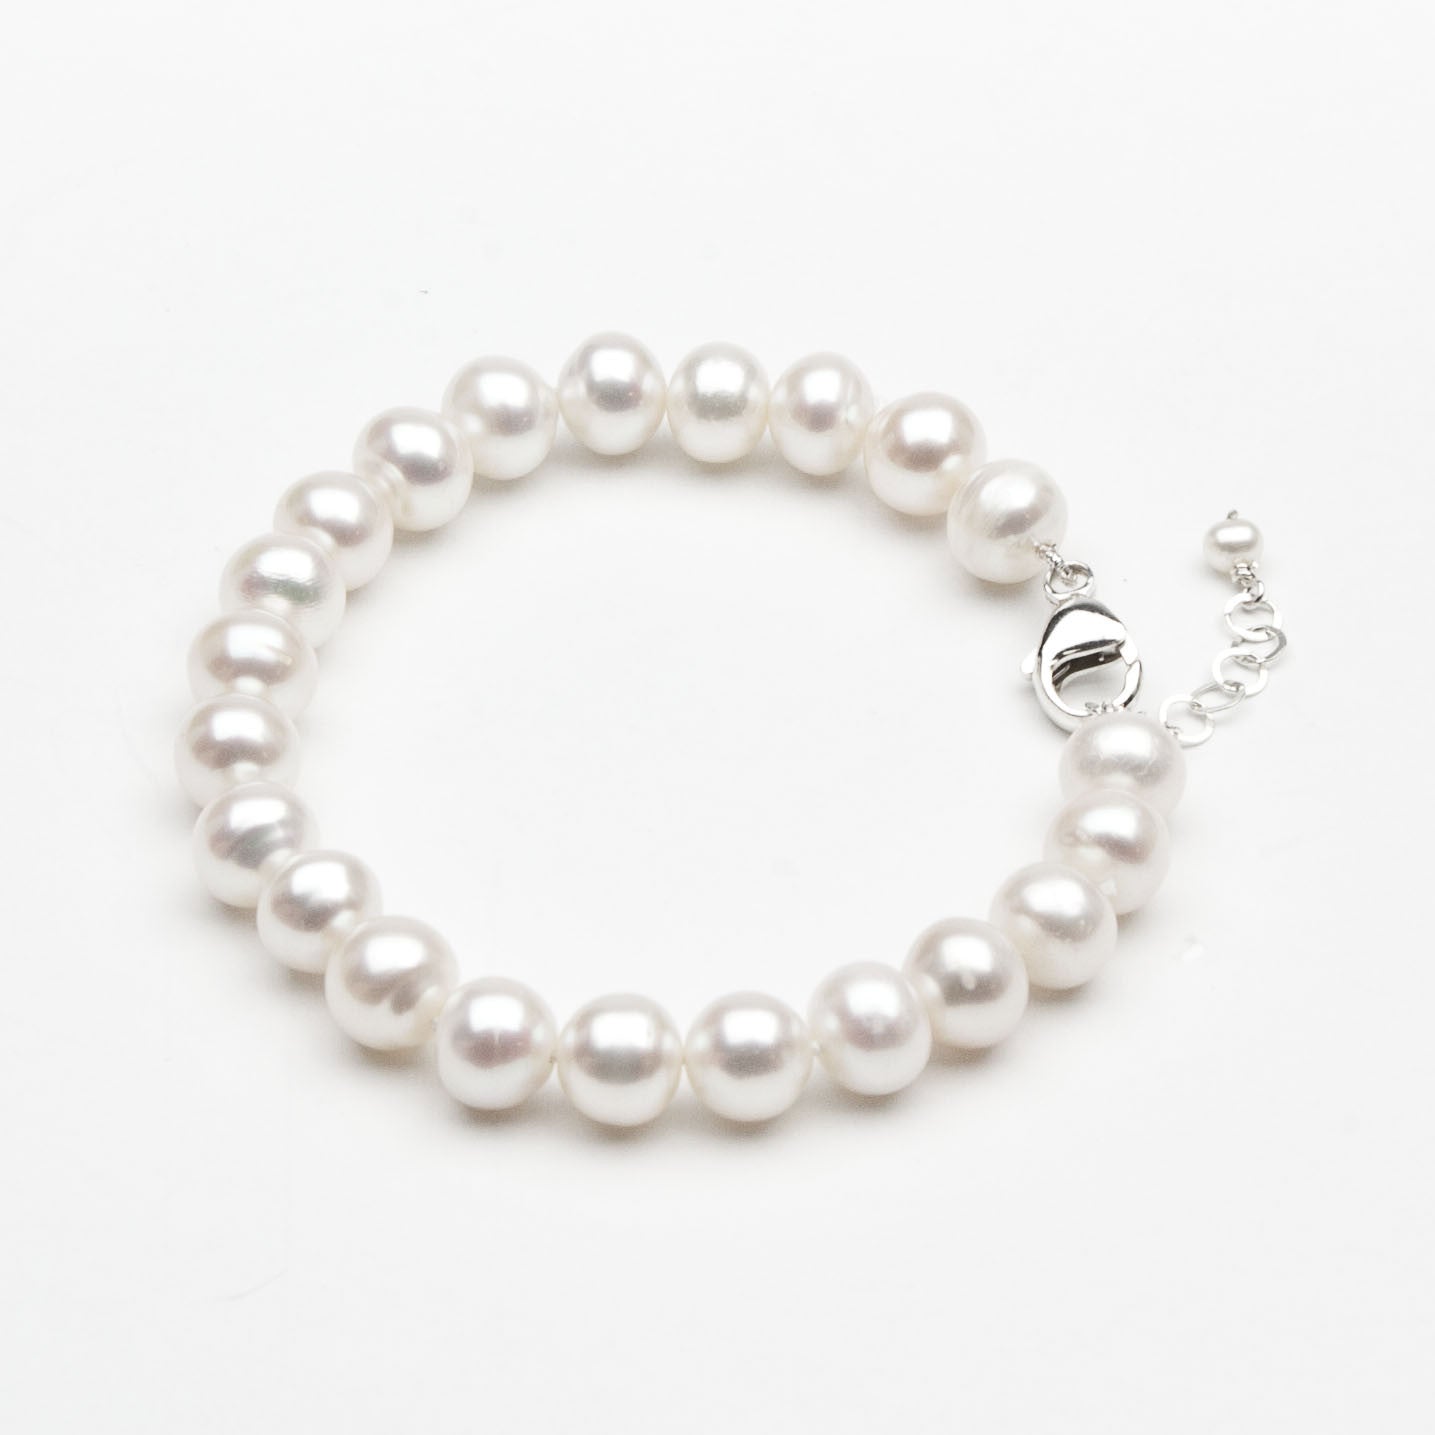 Cultured Freshwater Pearl Single Strand Bracelet 7-8mm Jewelry,Bracelet Bourdage Pearl Jewelry    sherri bourdage